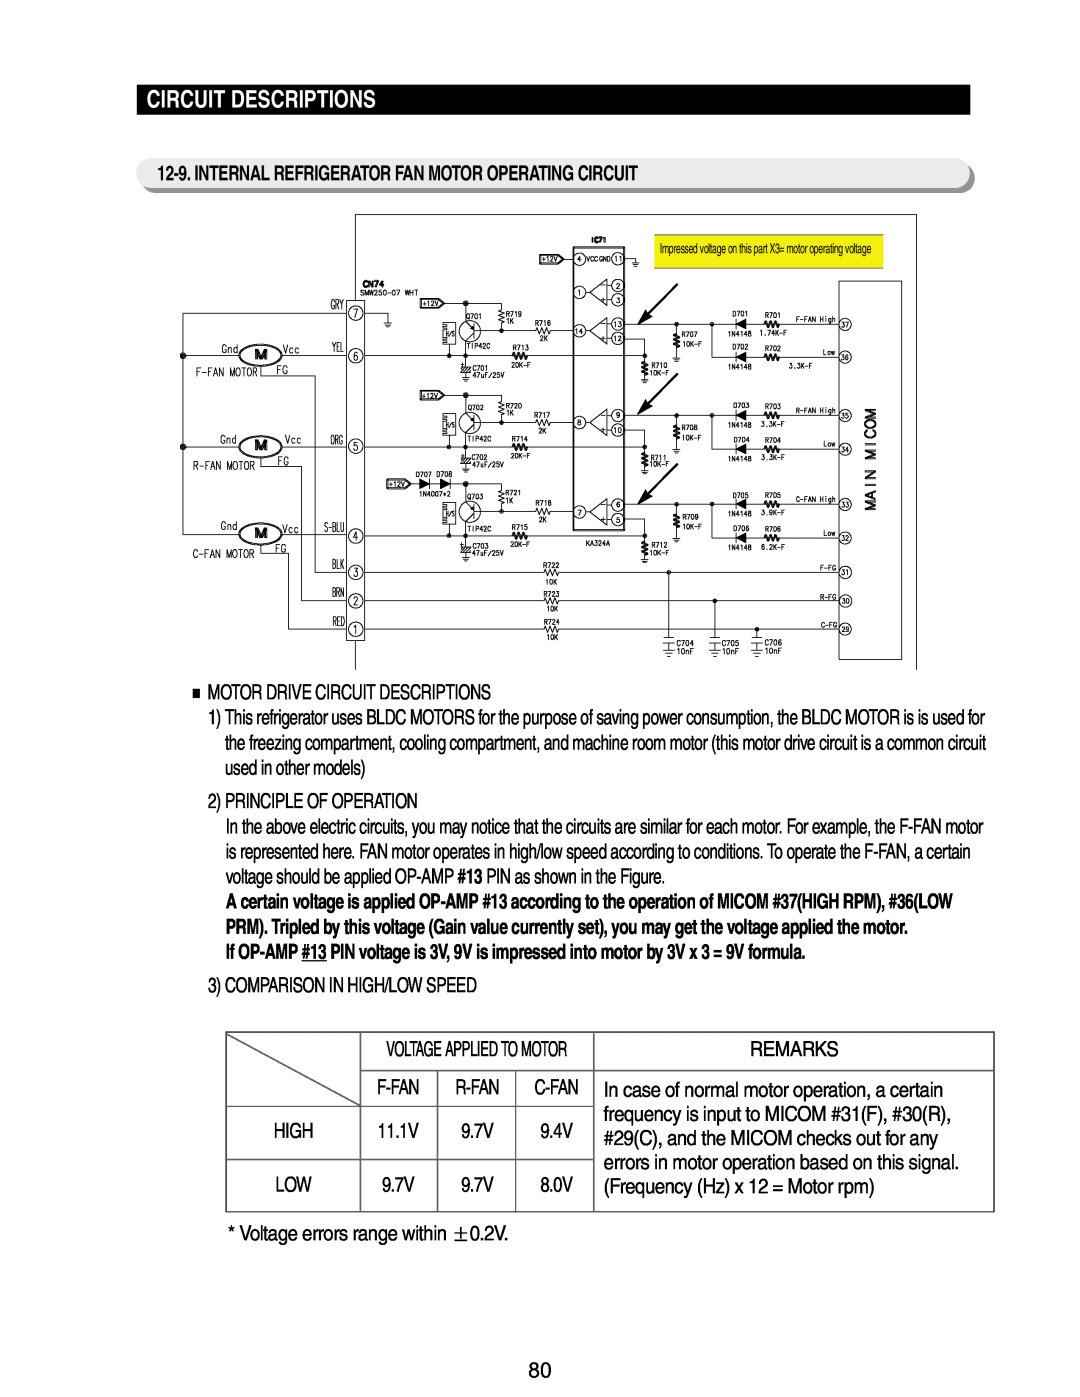 Samsung RM255BABB, RM255BASB manual Internal Refrigerator Fan Motor Operating Circuit, Circuit Descriptions, F-Fan, 0.2V 